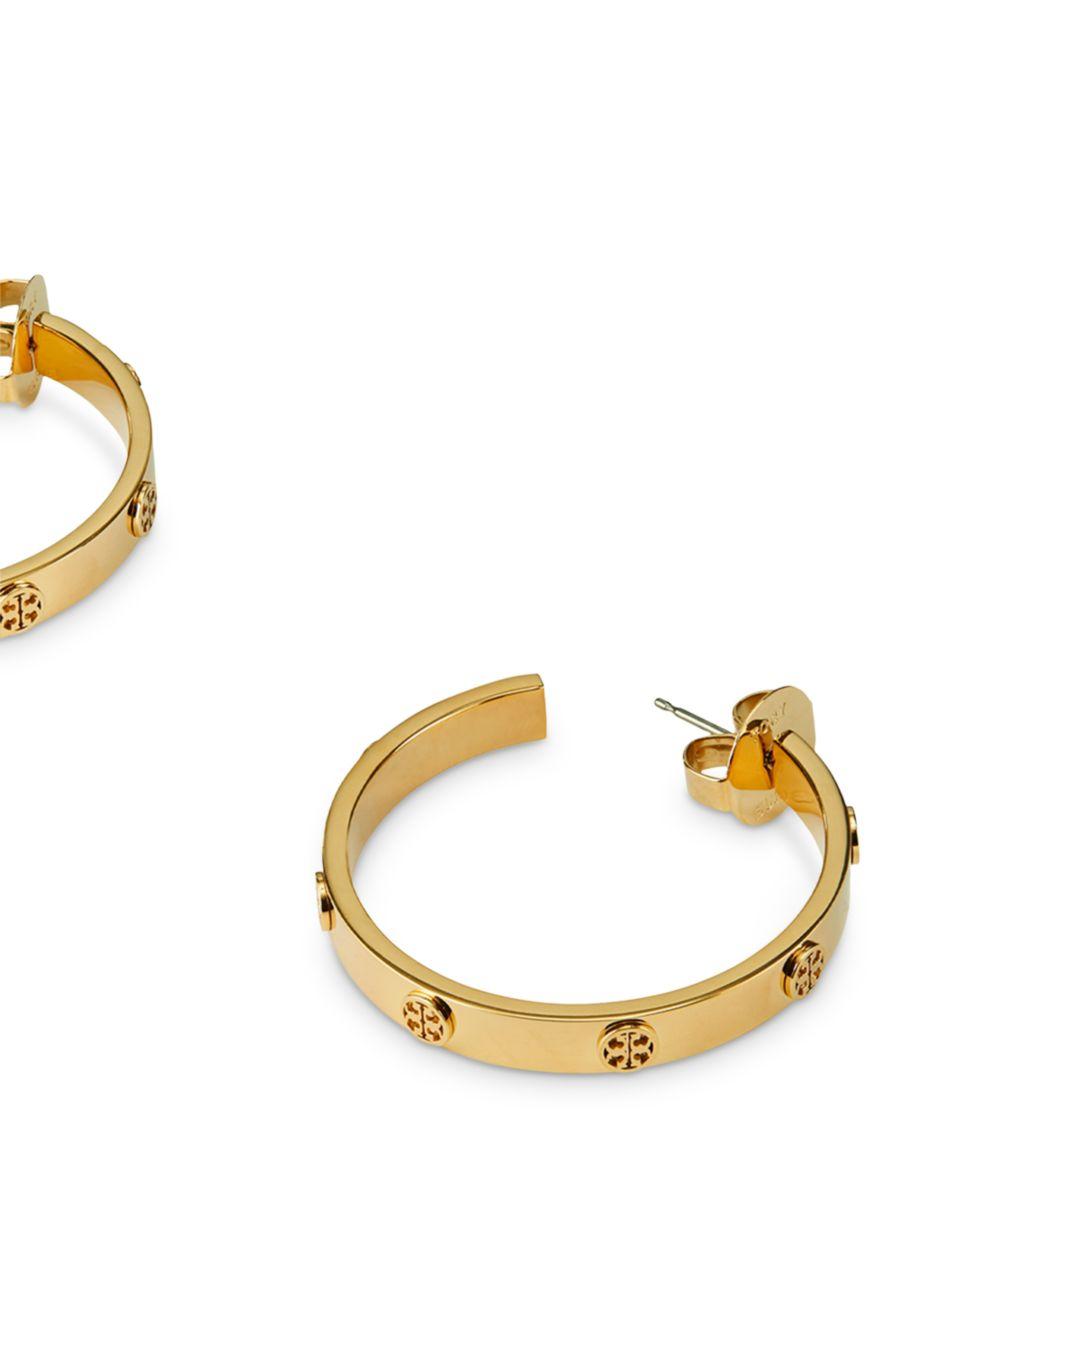 Tory Burch Miller Insignia Studded Hoop Earrings In Gold Tone Stainless  Steel in Metallic | Lyst